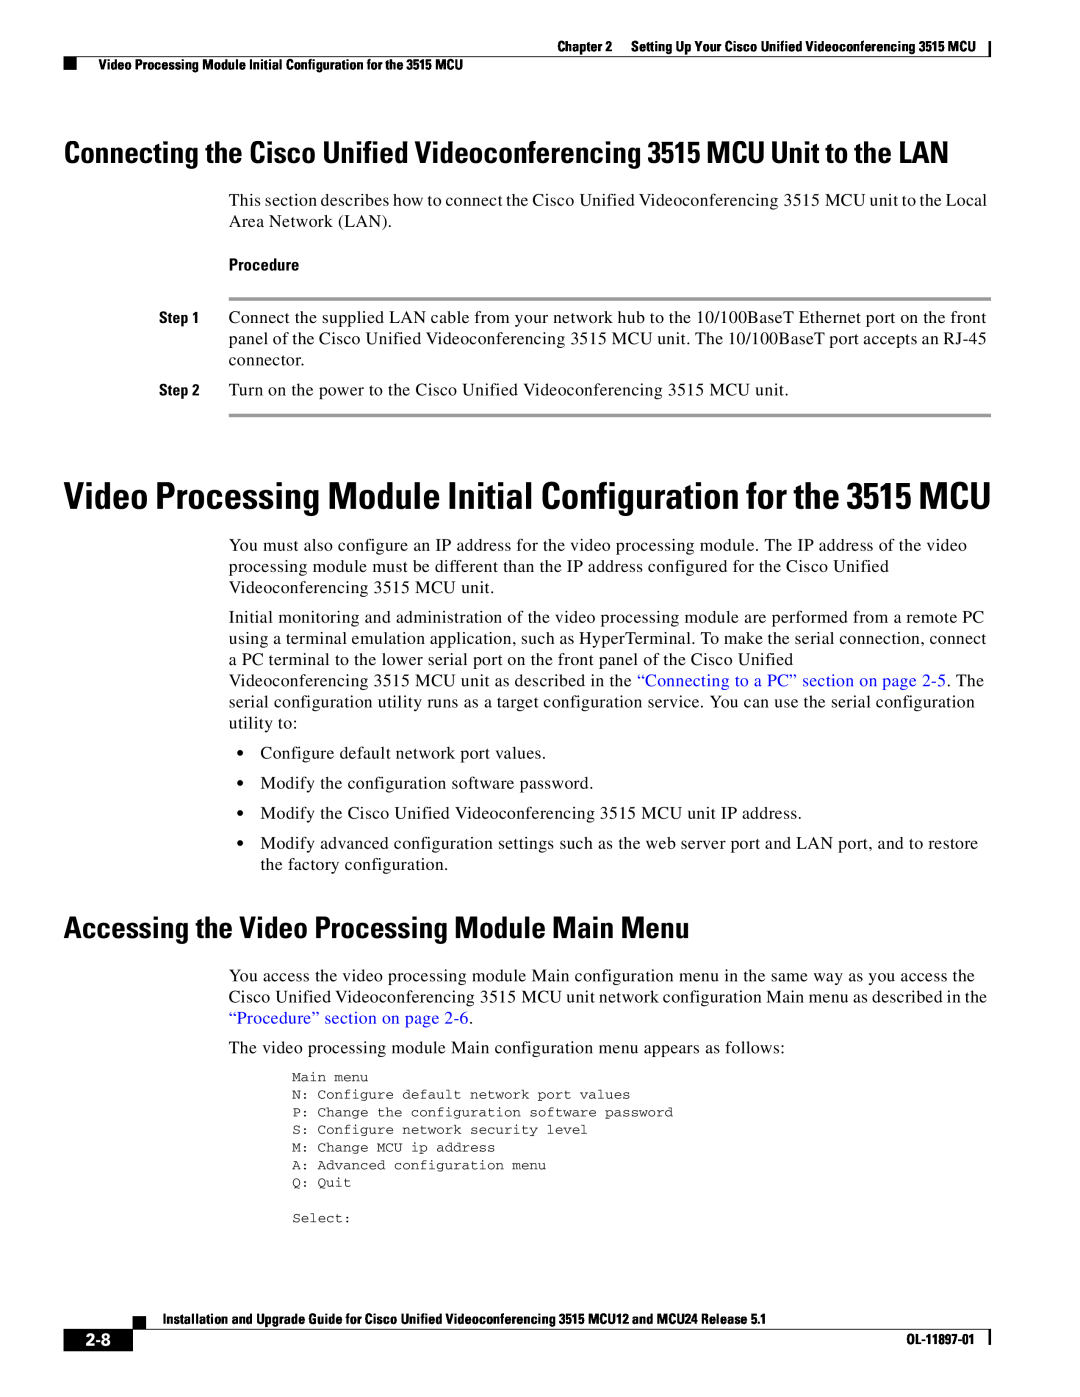 Cisco Systems MCU24 manual Video Processing Module Initial Configuration for the 3515 MCU 